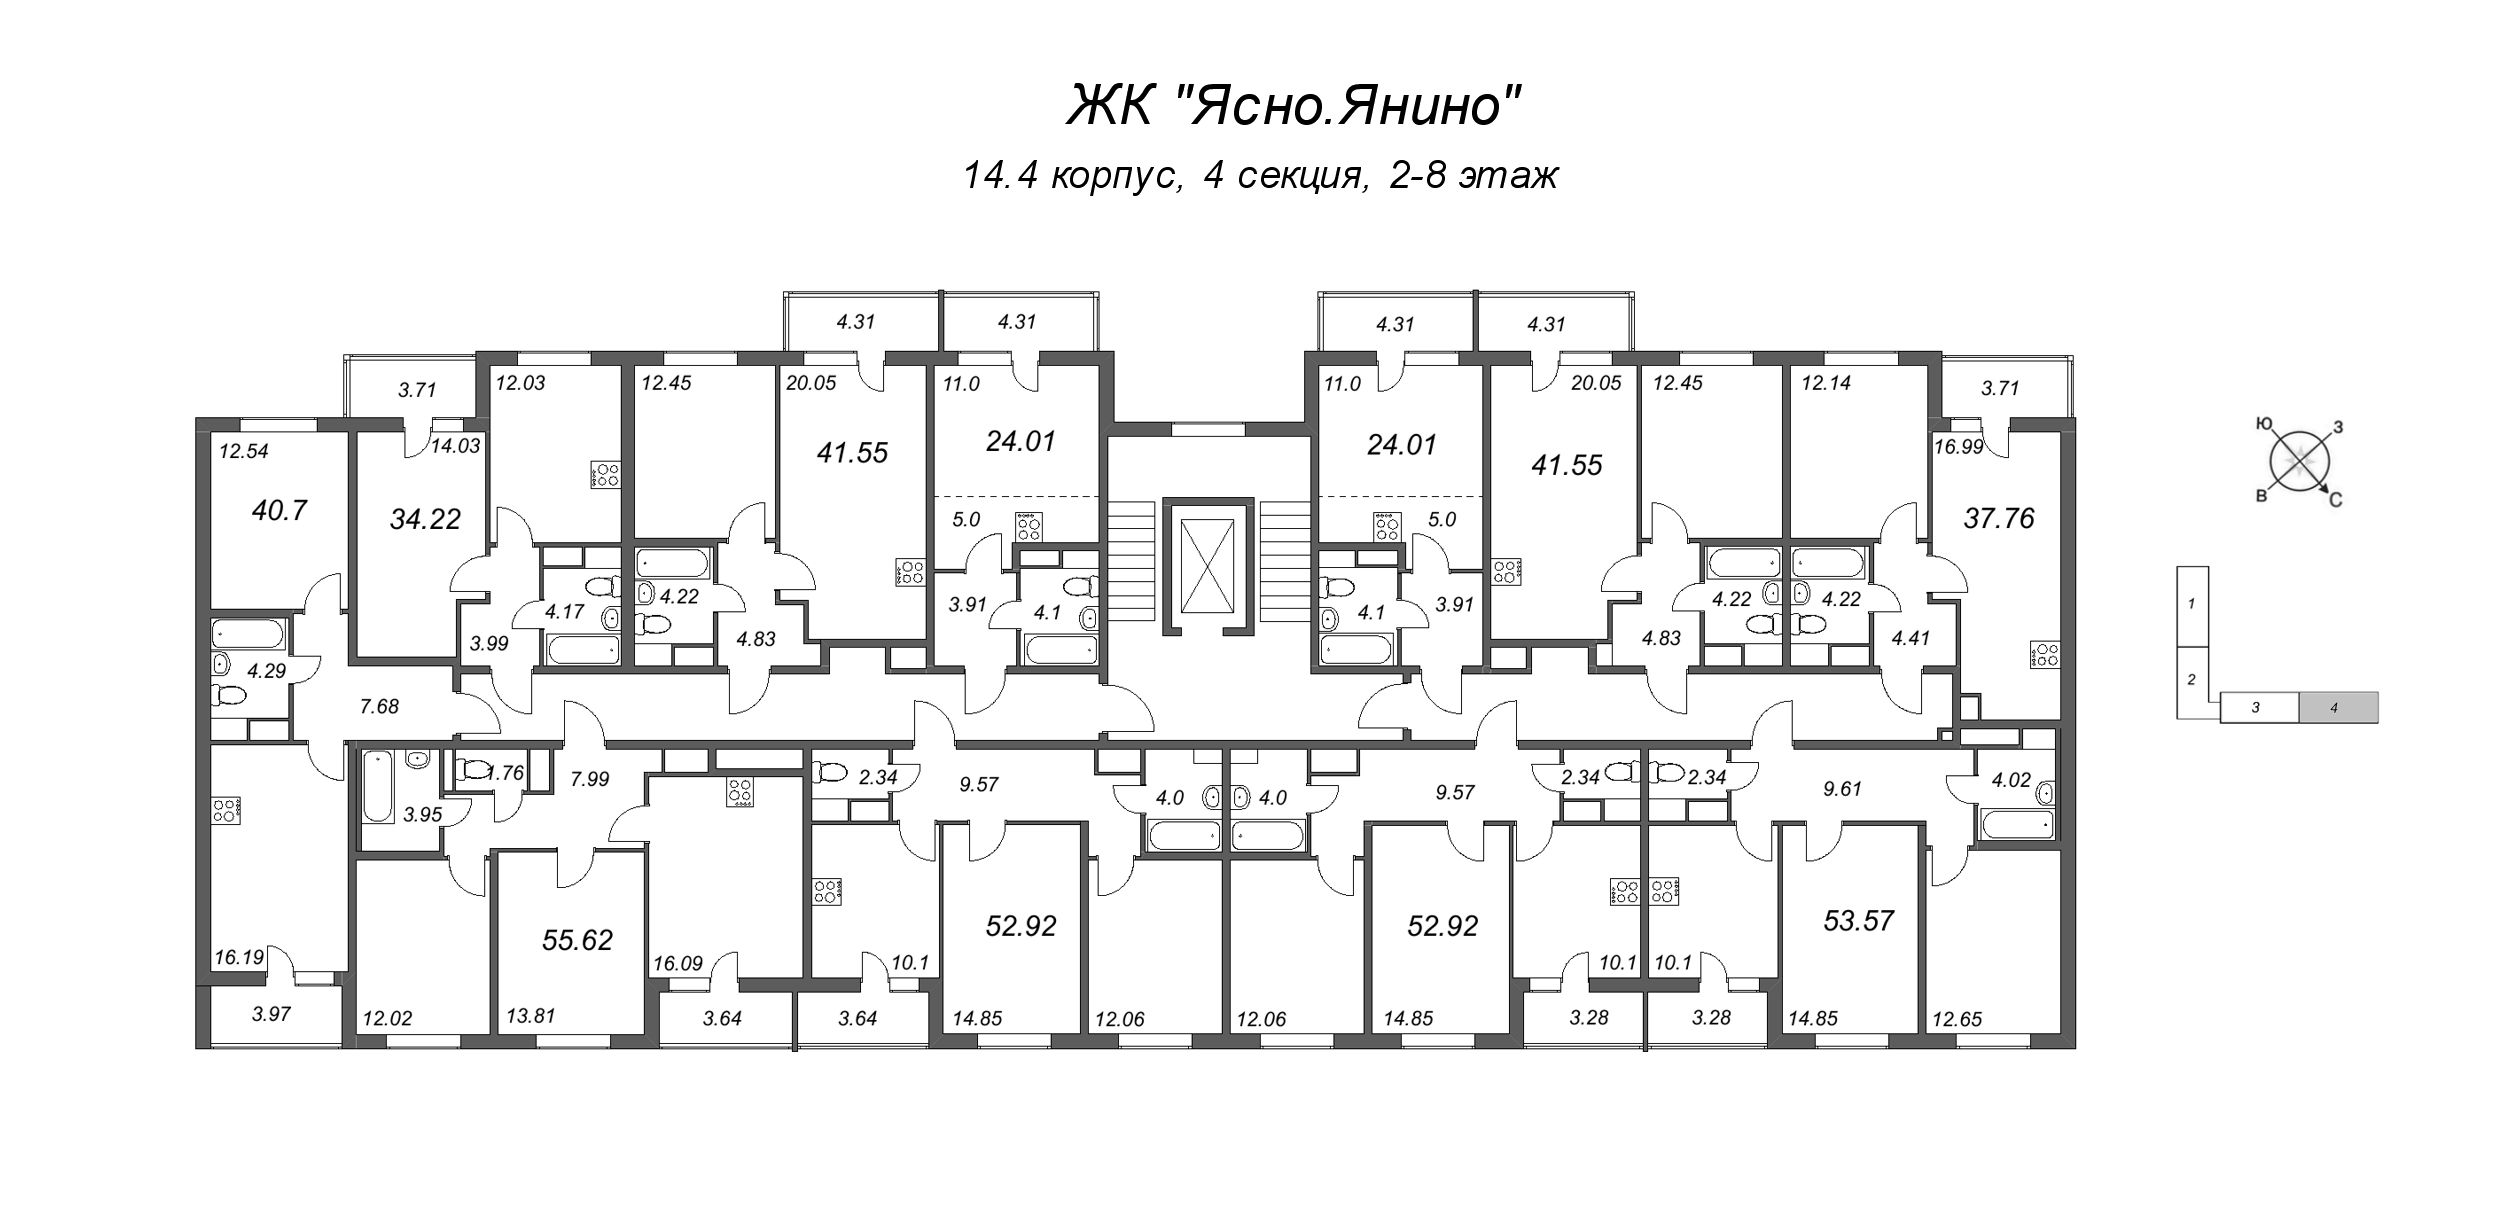 2-комнатная (Евро) квартира, 37.76 м² - планировка этажа